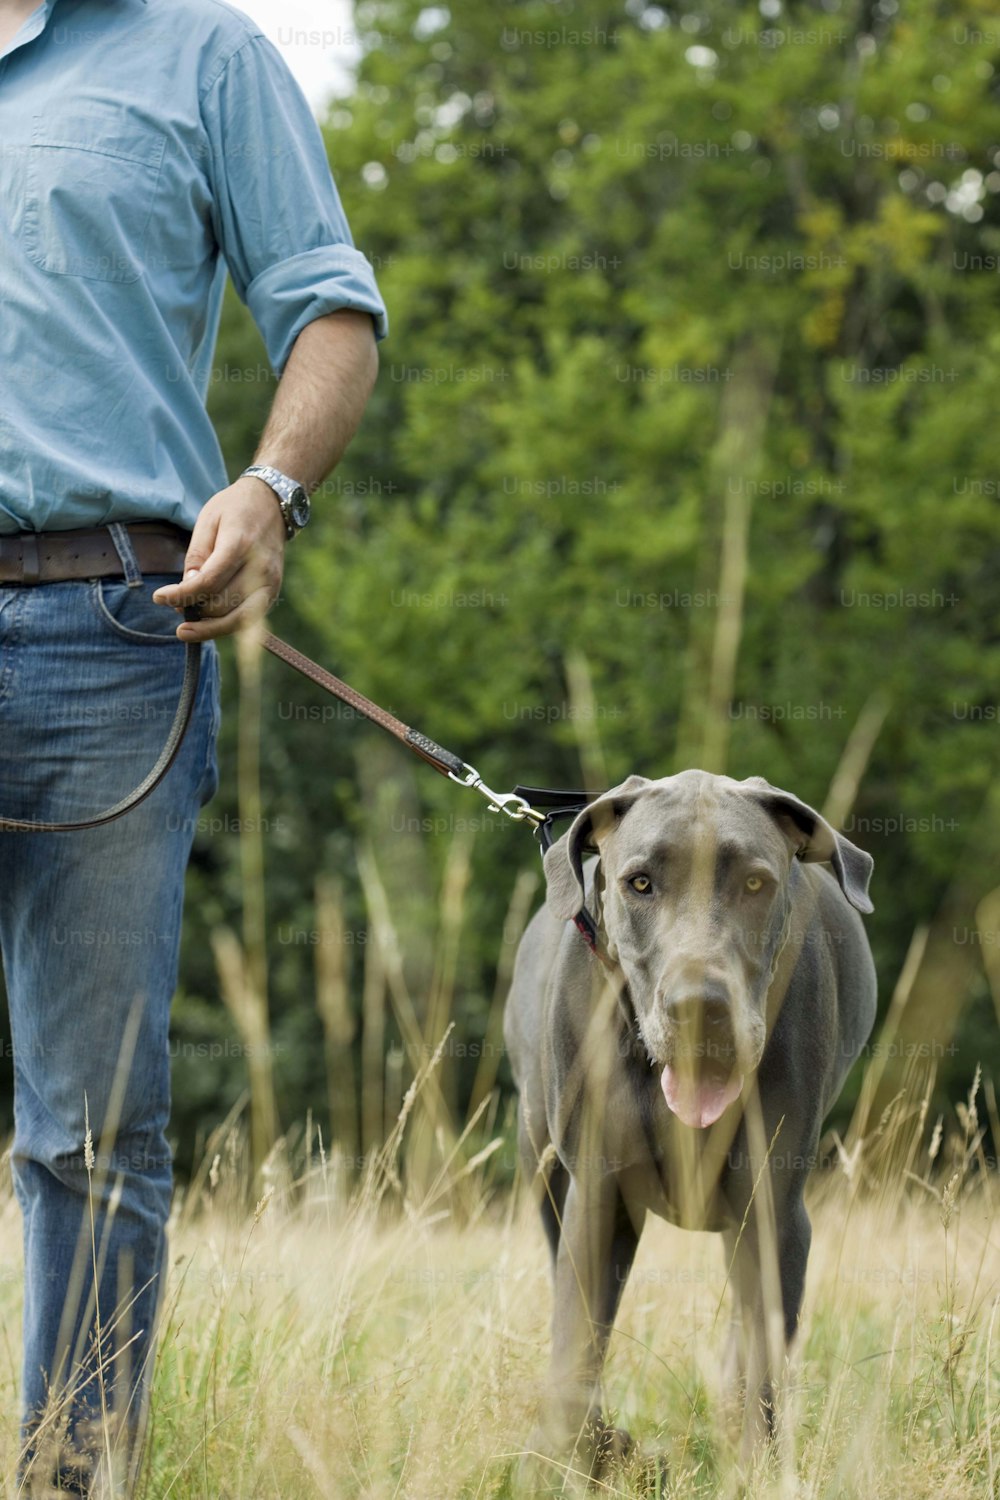 a man walking a dog on a leash in a field